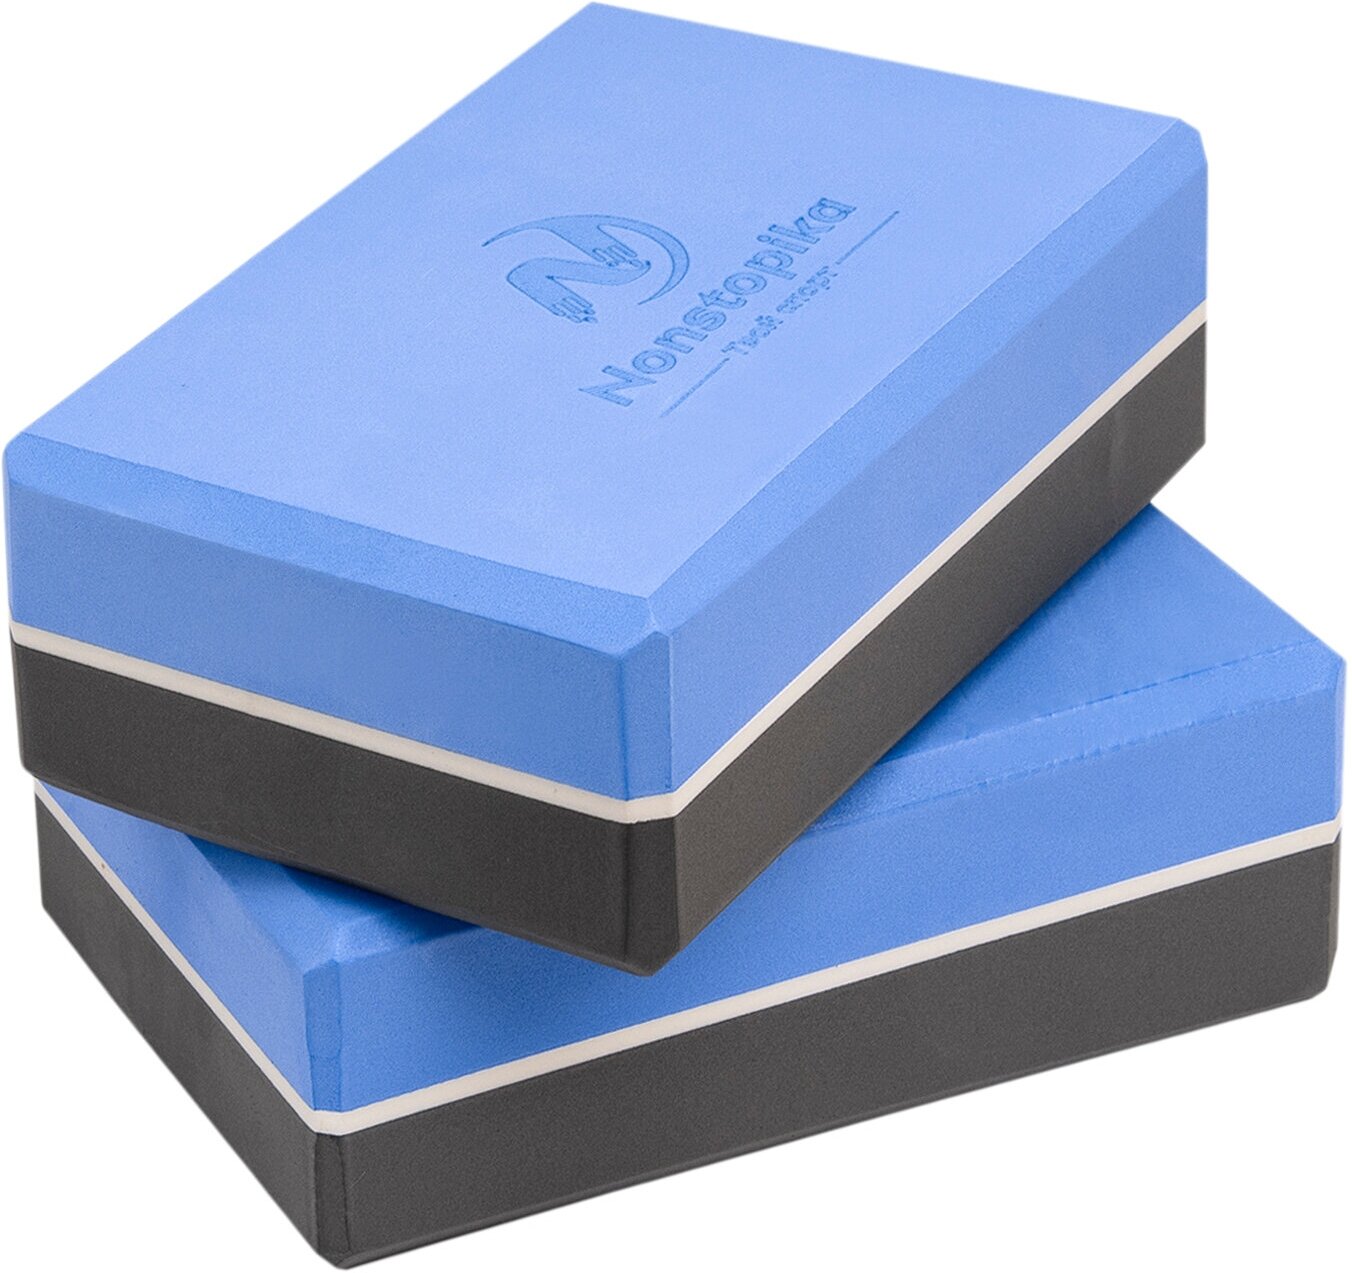 Блок для йоги/Кирпич спортивный/Блок для фитнеса/Опорный блок /Кубик для йоги и пилатеса Nonstopika 23х15х7.5см сине-черный, опорный кирпич, 2 штуки